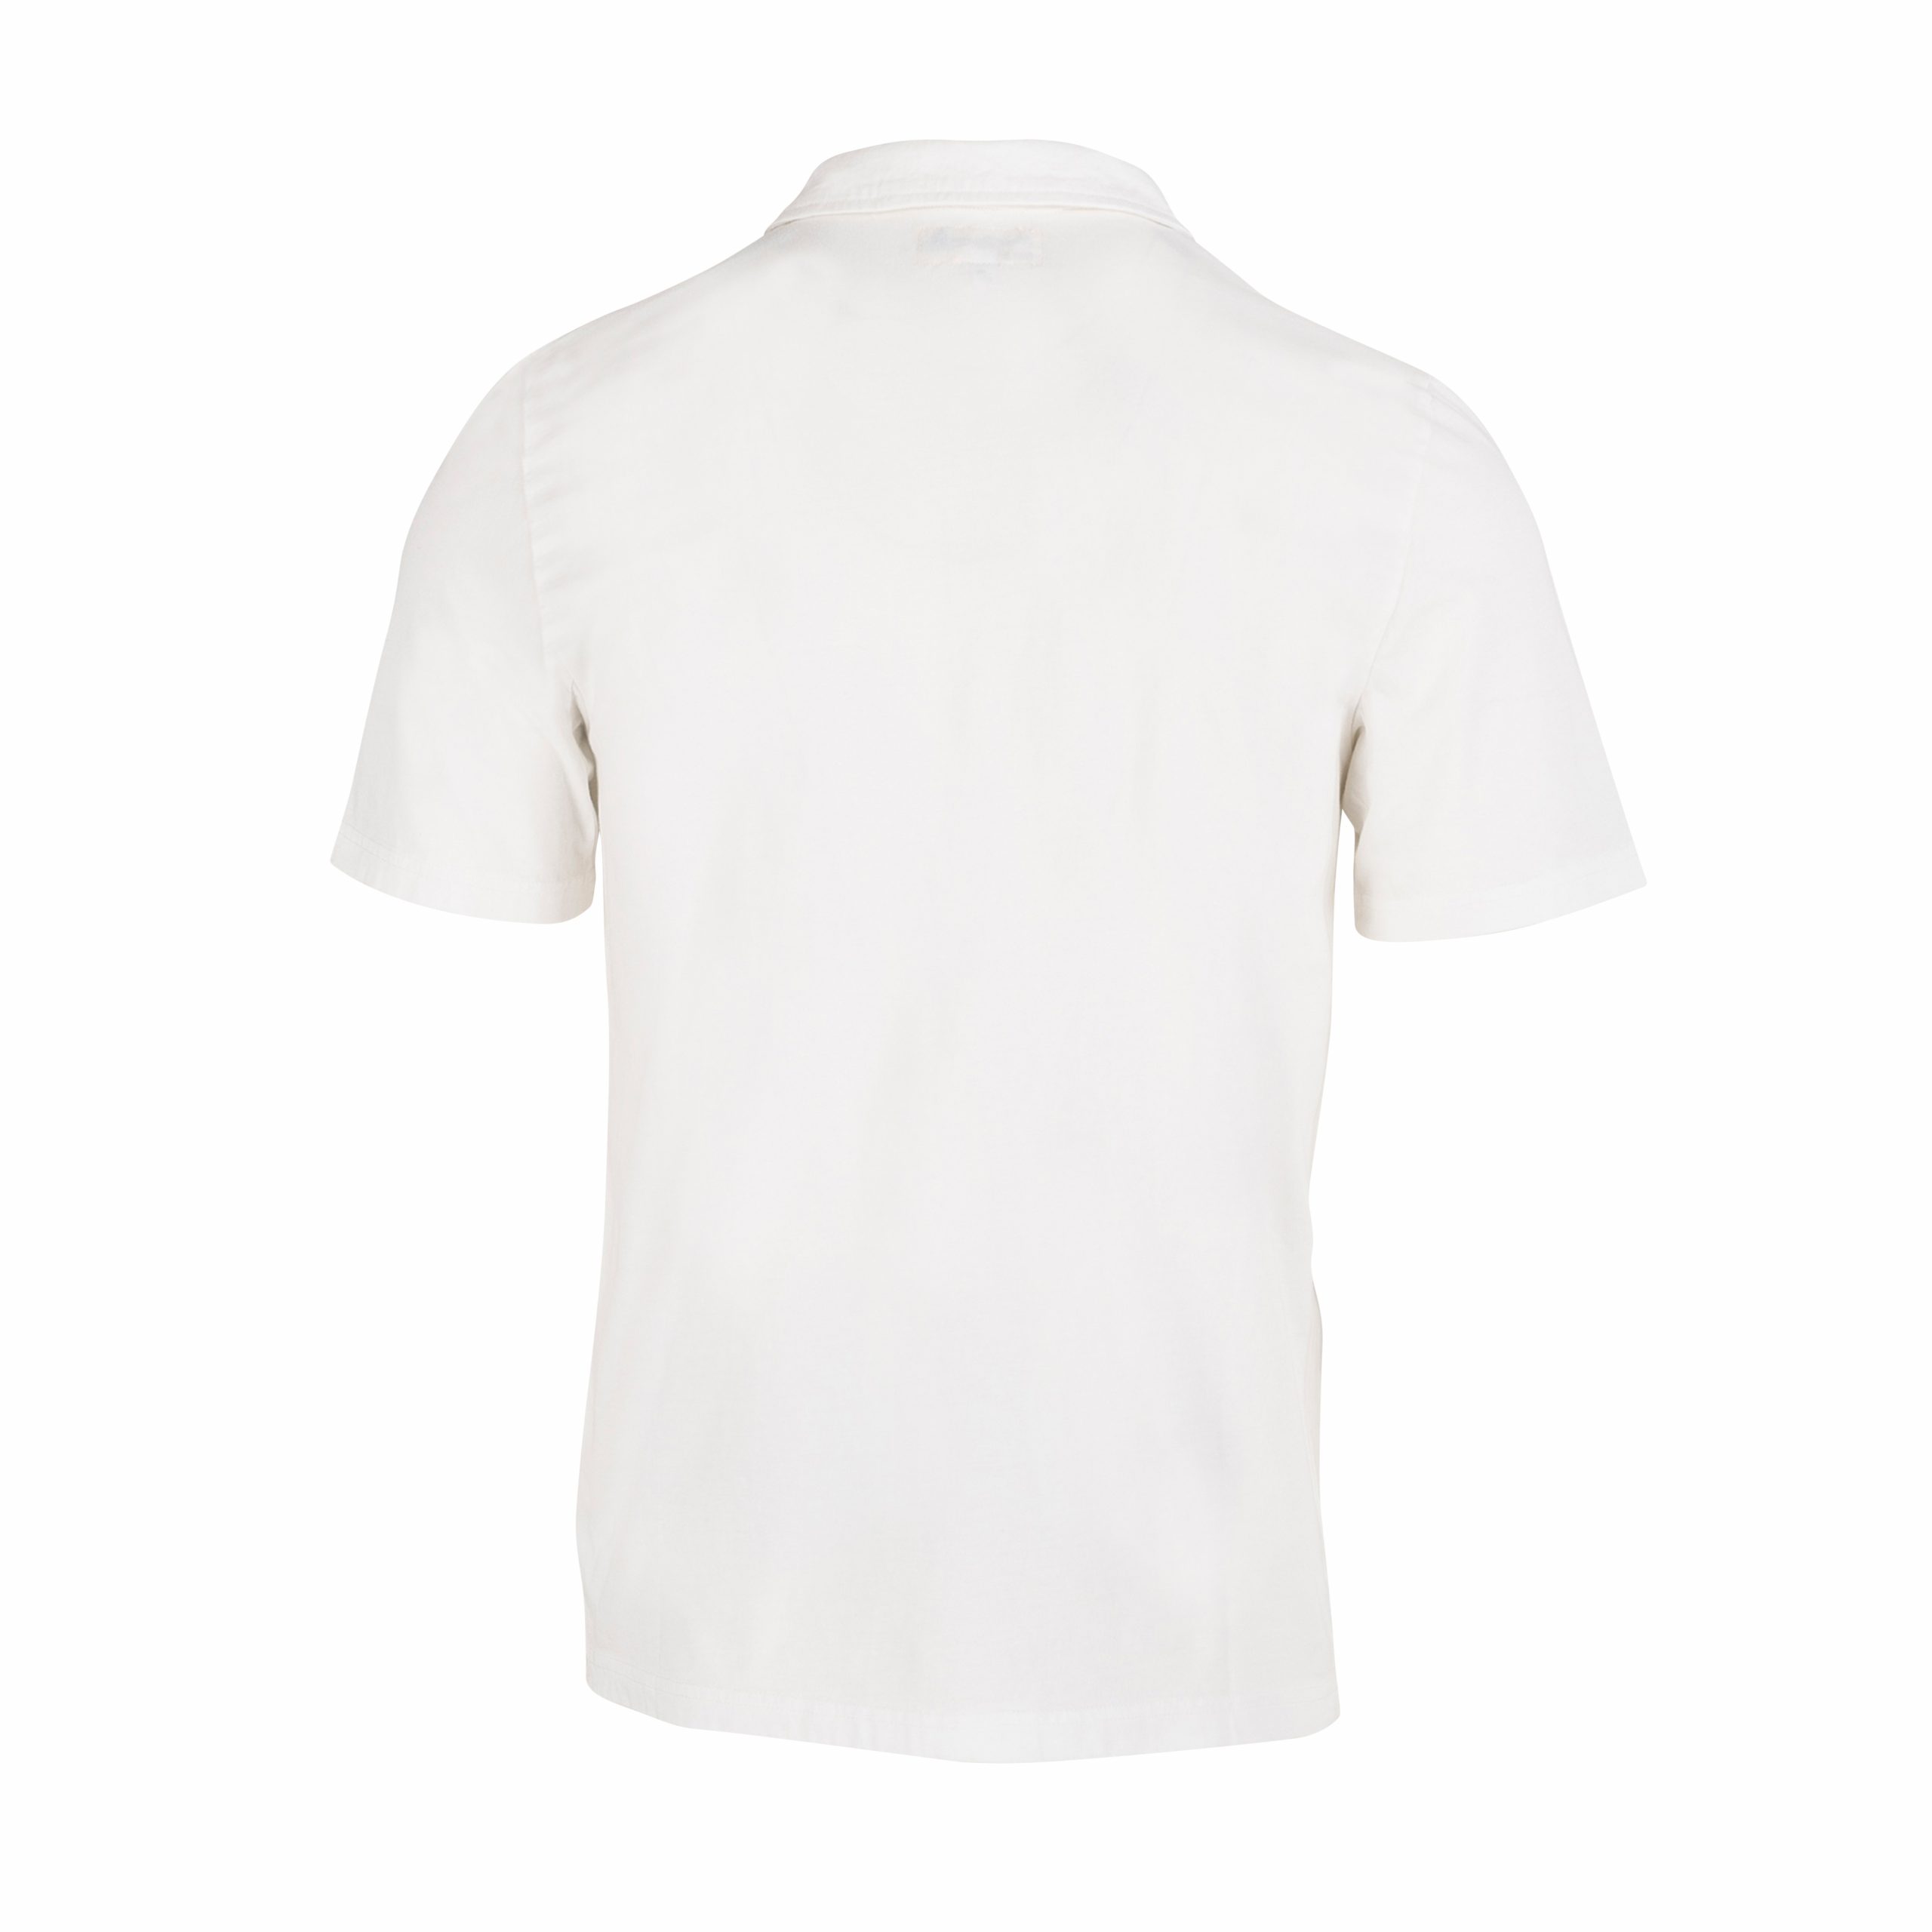 Good Basics PLP02 Poloshirt with Pocket white – B74